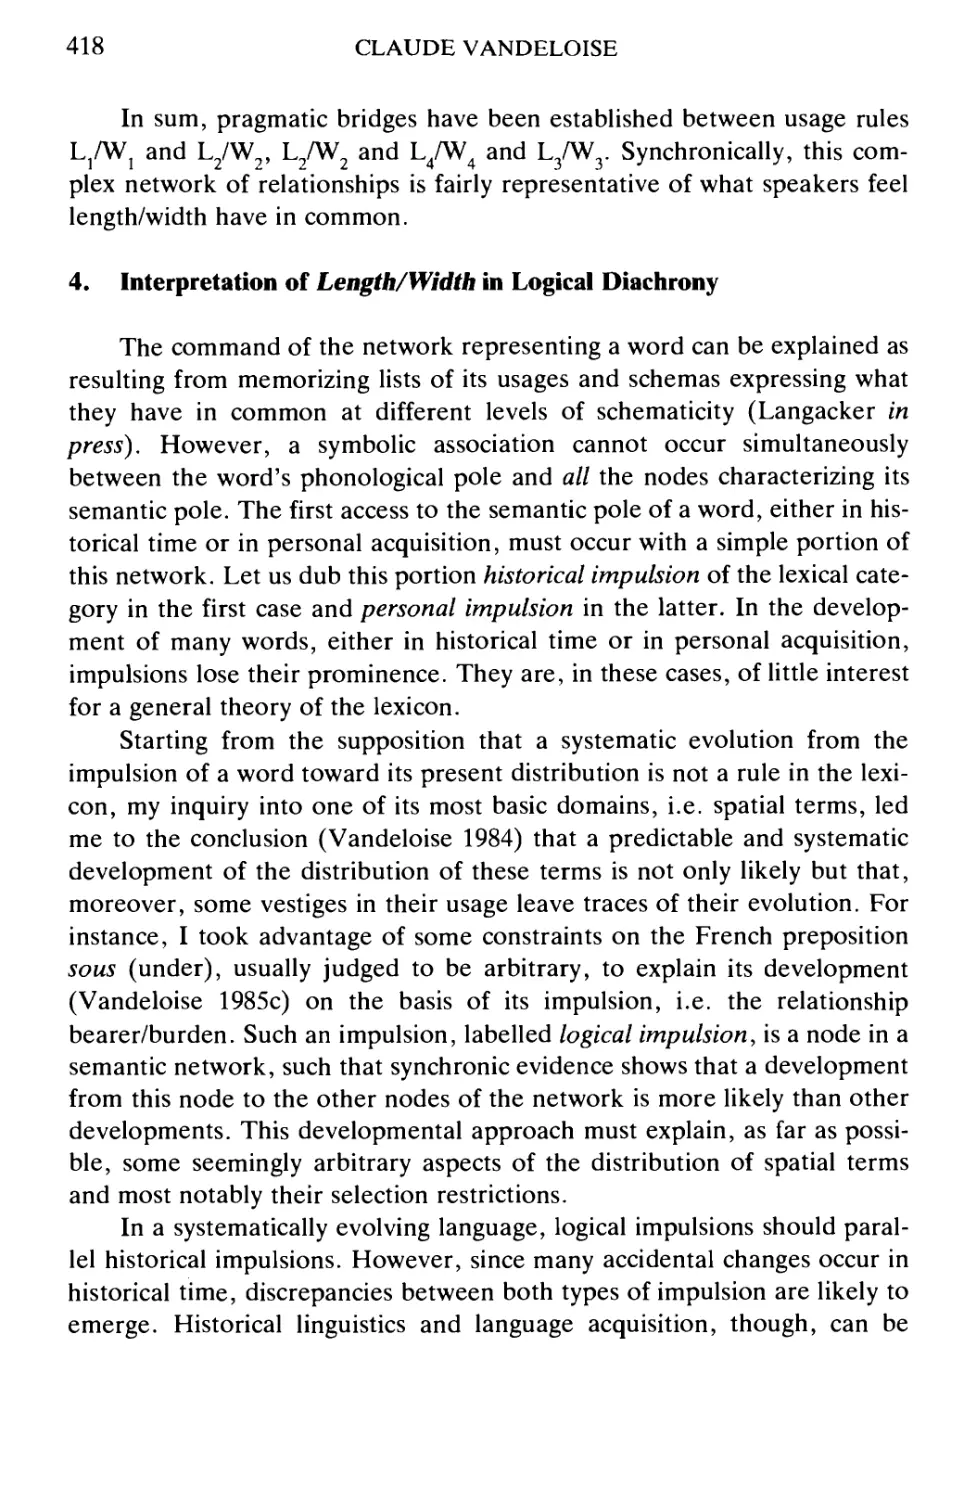 4. Interpretation of Length/Width in Logical Diachrony